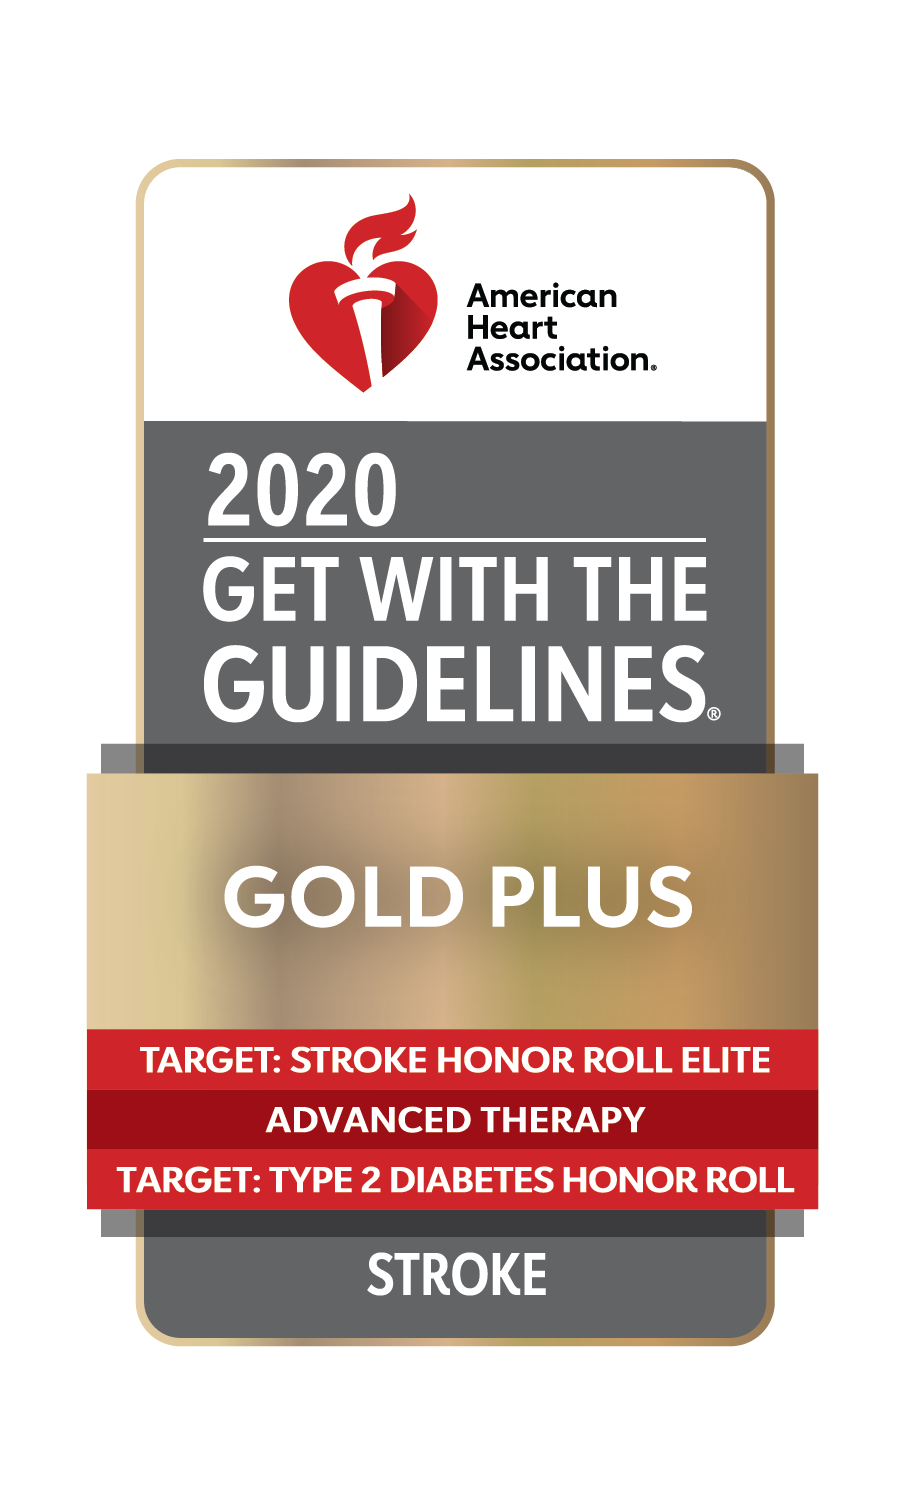 American Heart Association 2020 Gold Plus award for stroke 